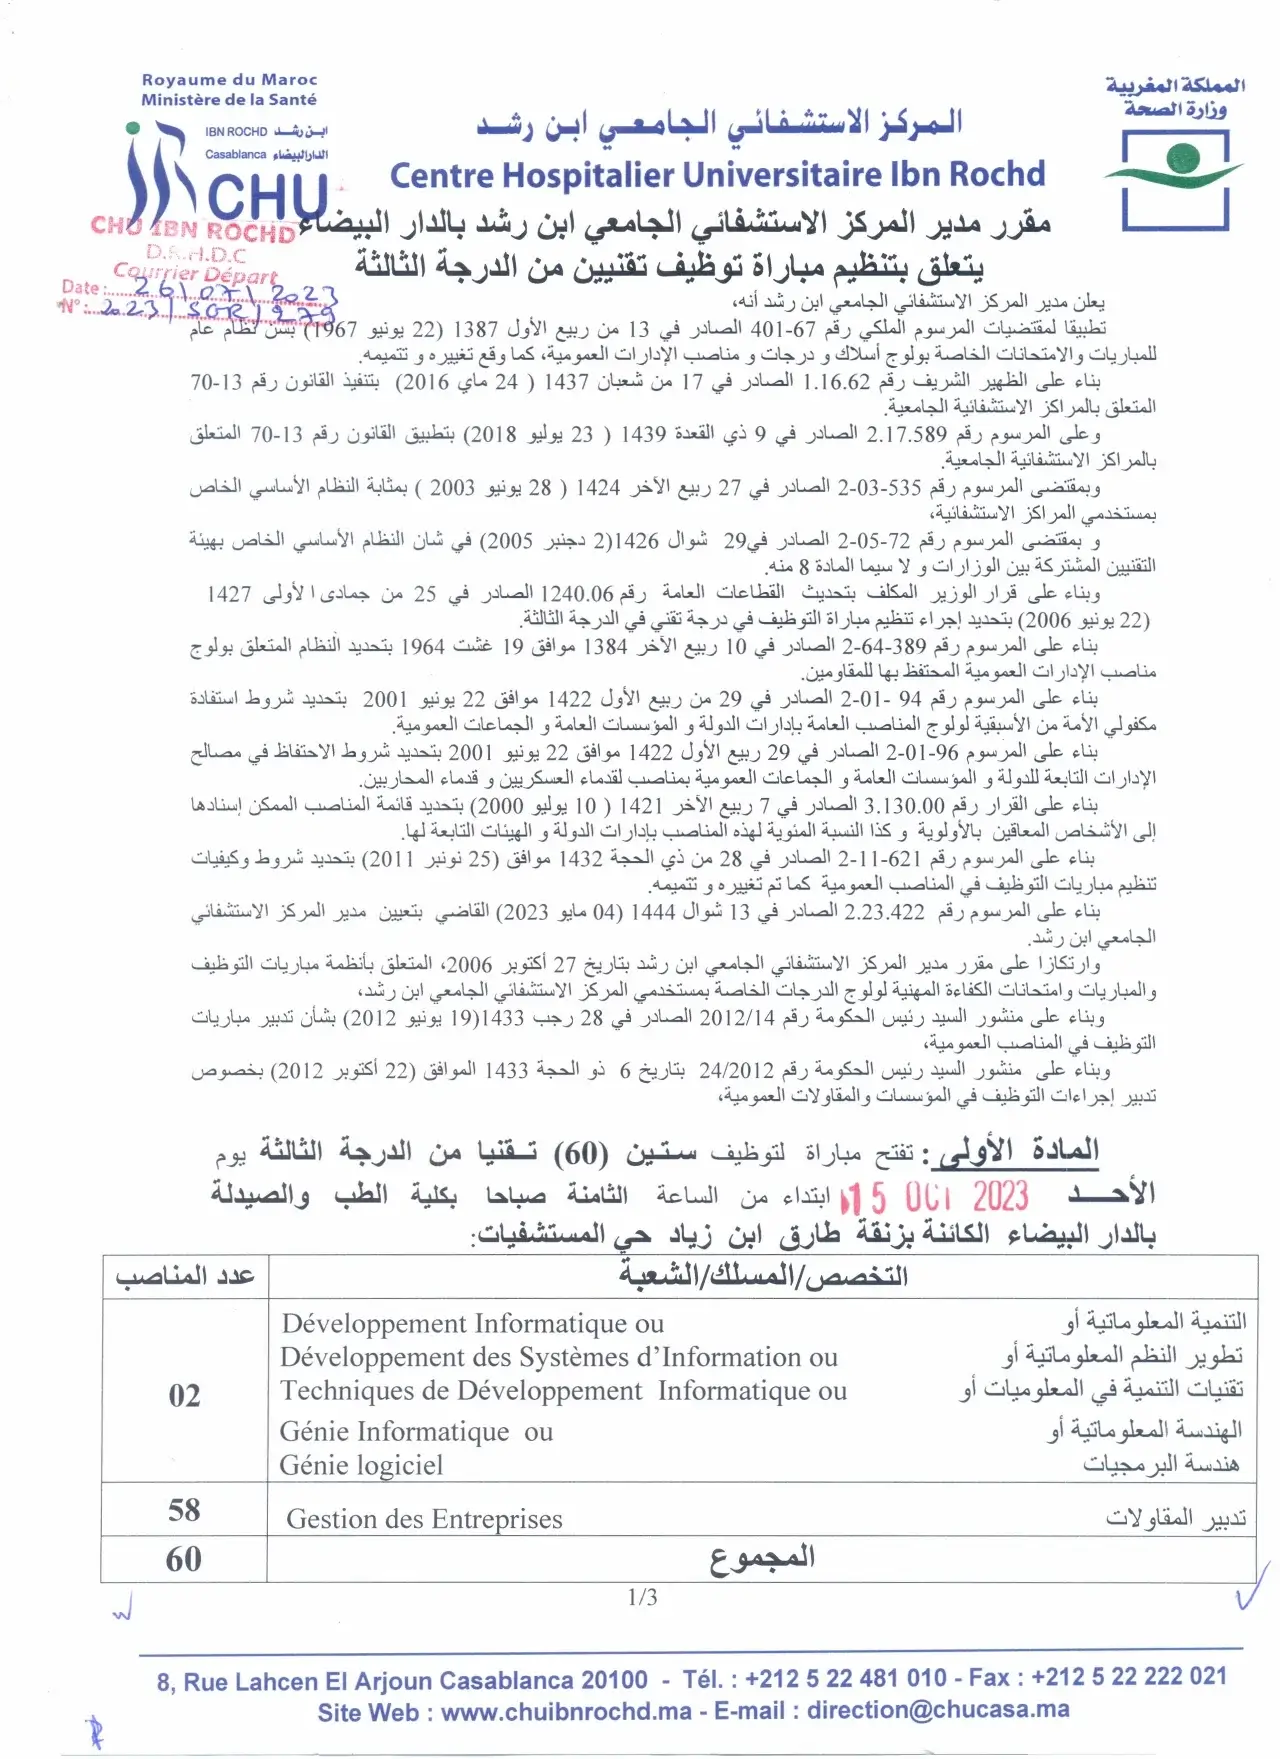 Concours de Recrutement CHU Ibn Rochd 2023 (60 postes)